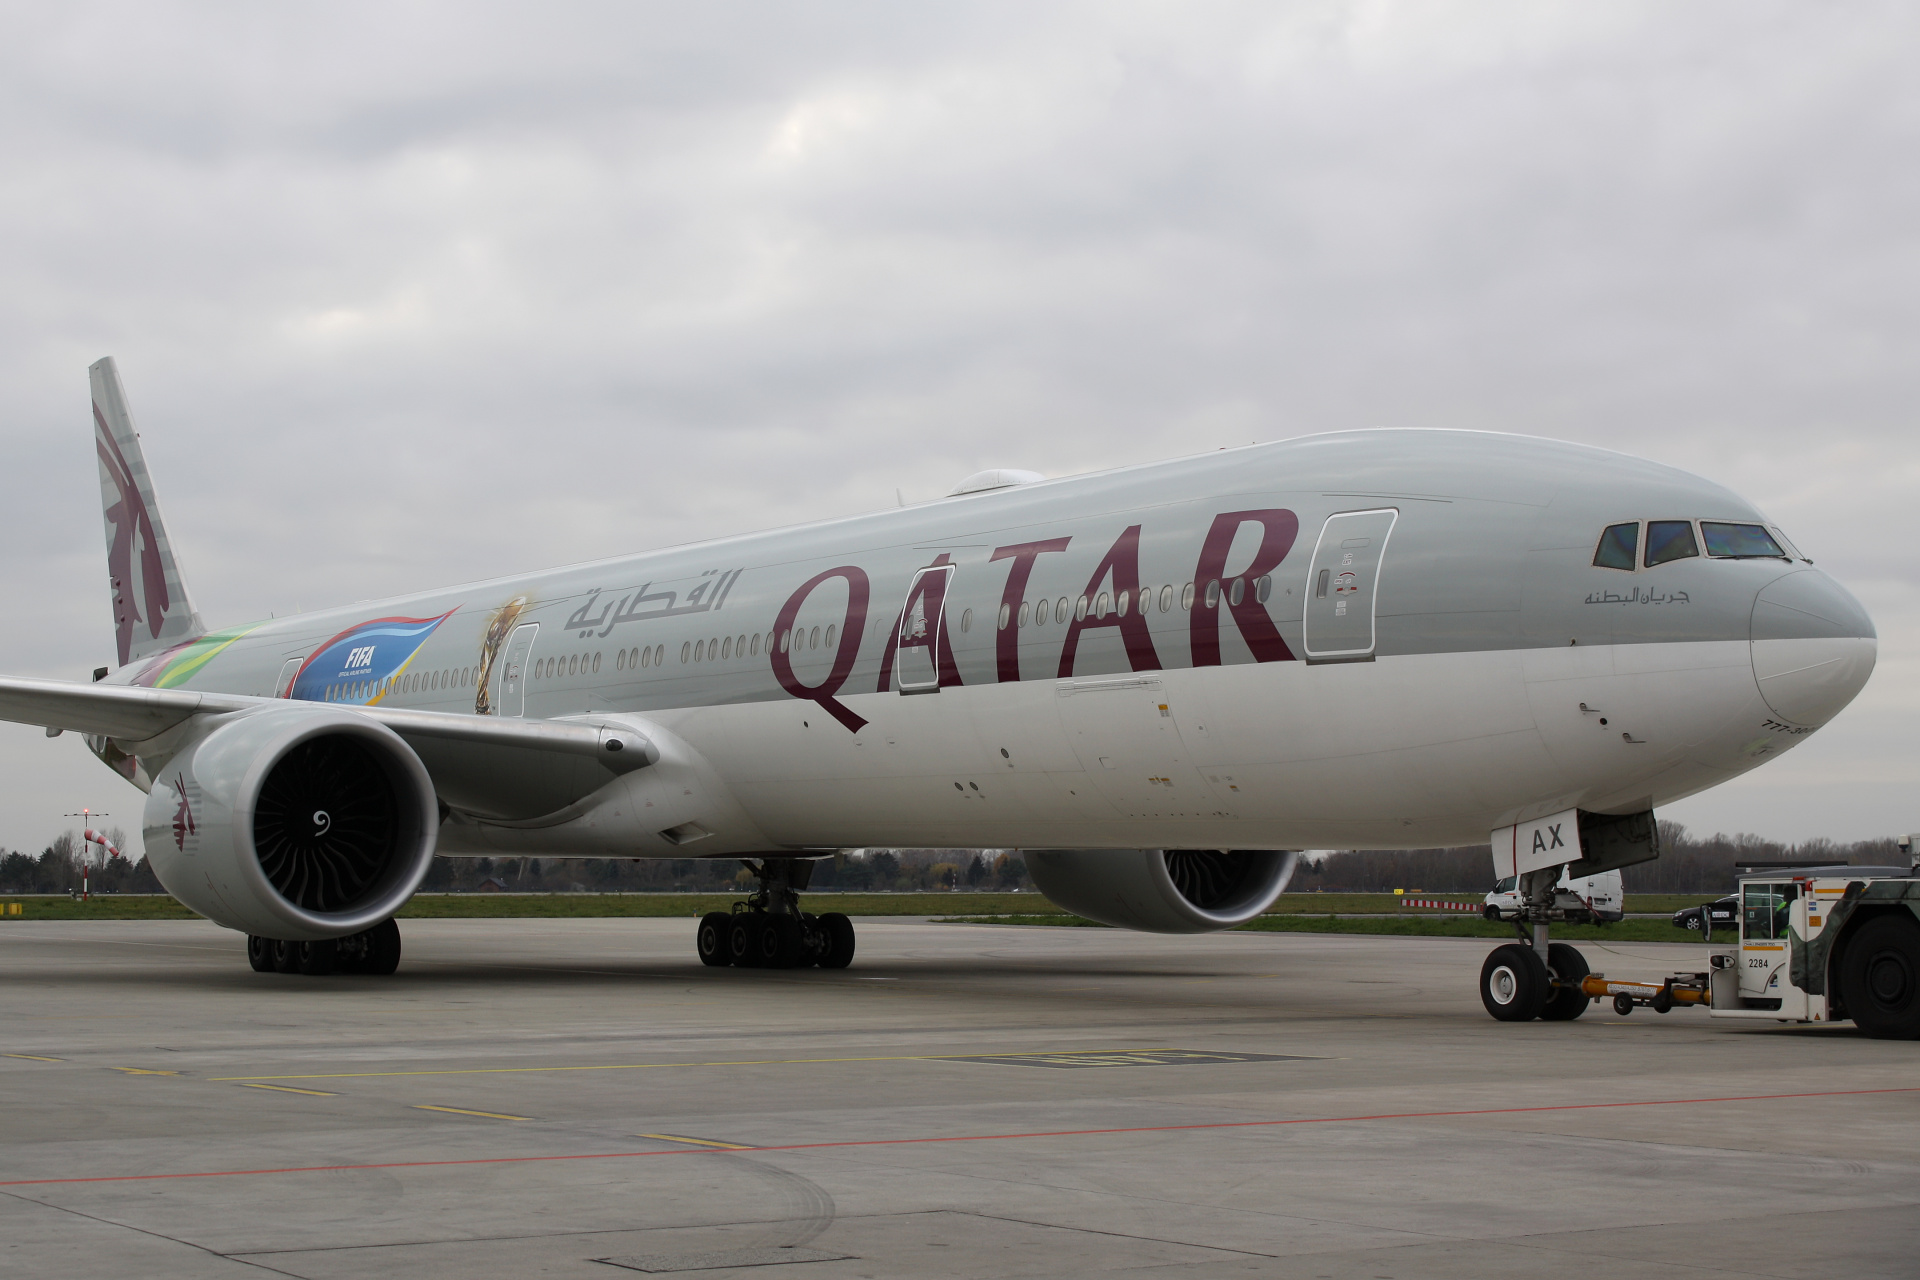 A7-BAX (FIFA World Cup 2022 livery) (Aircraft » EPWA Spotting » Boeing 777-300ER » Qatar Airways)